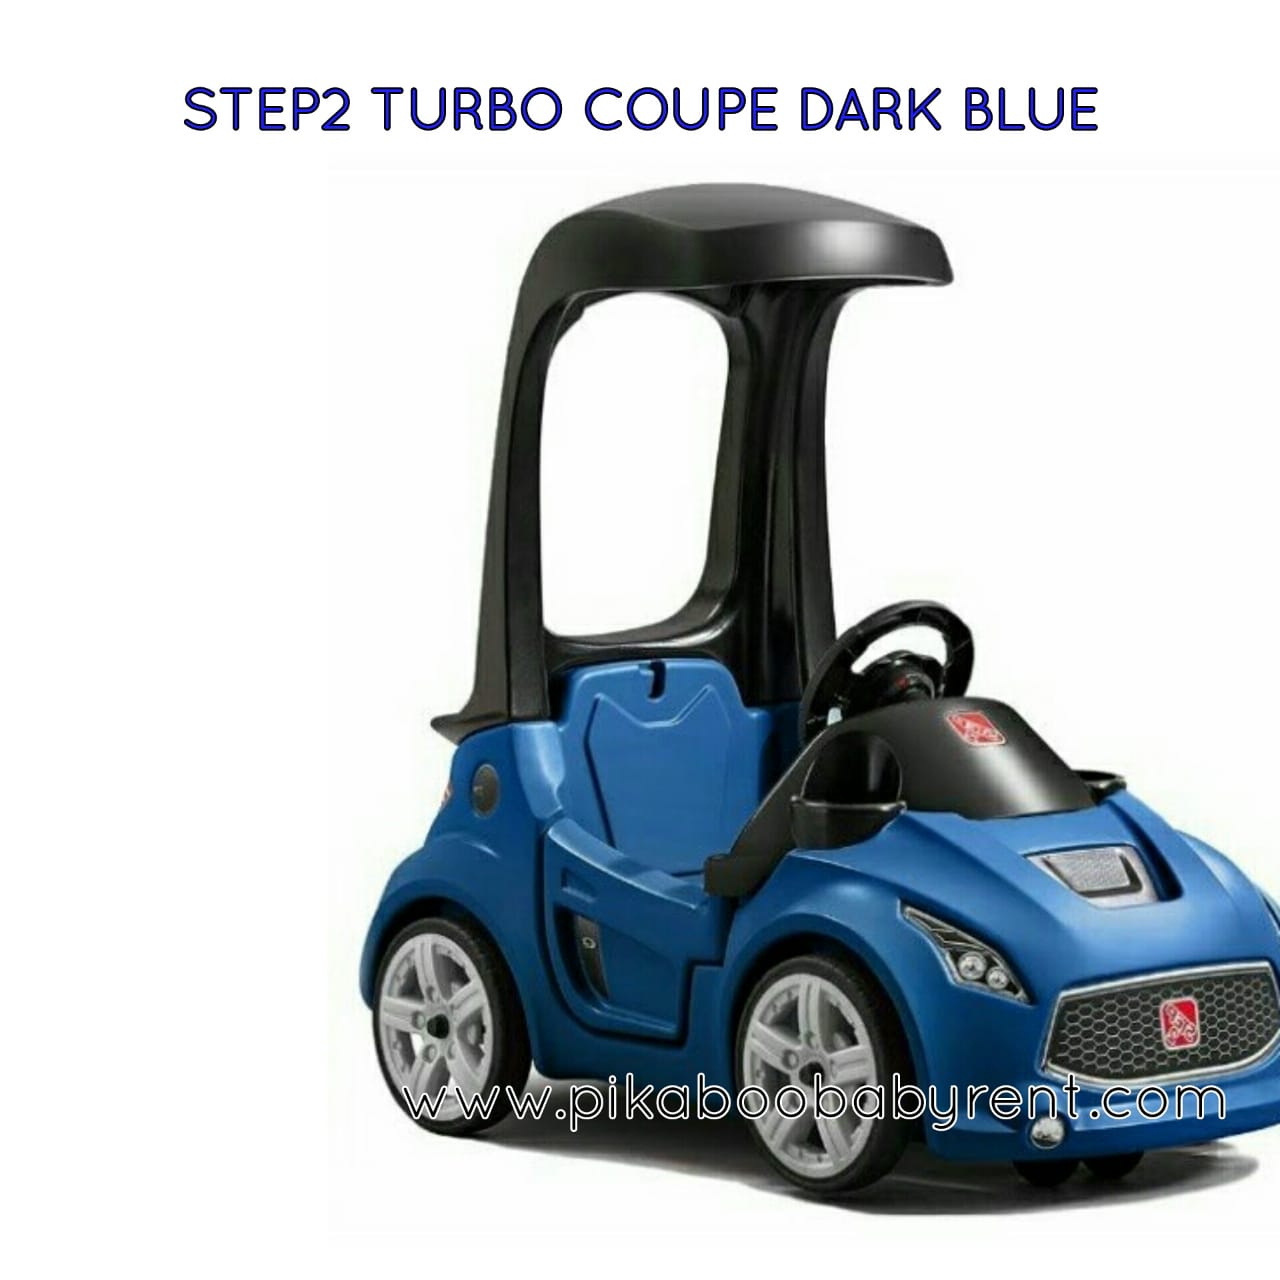 STEP2 TURBO COUPE DARK BLUE